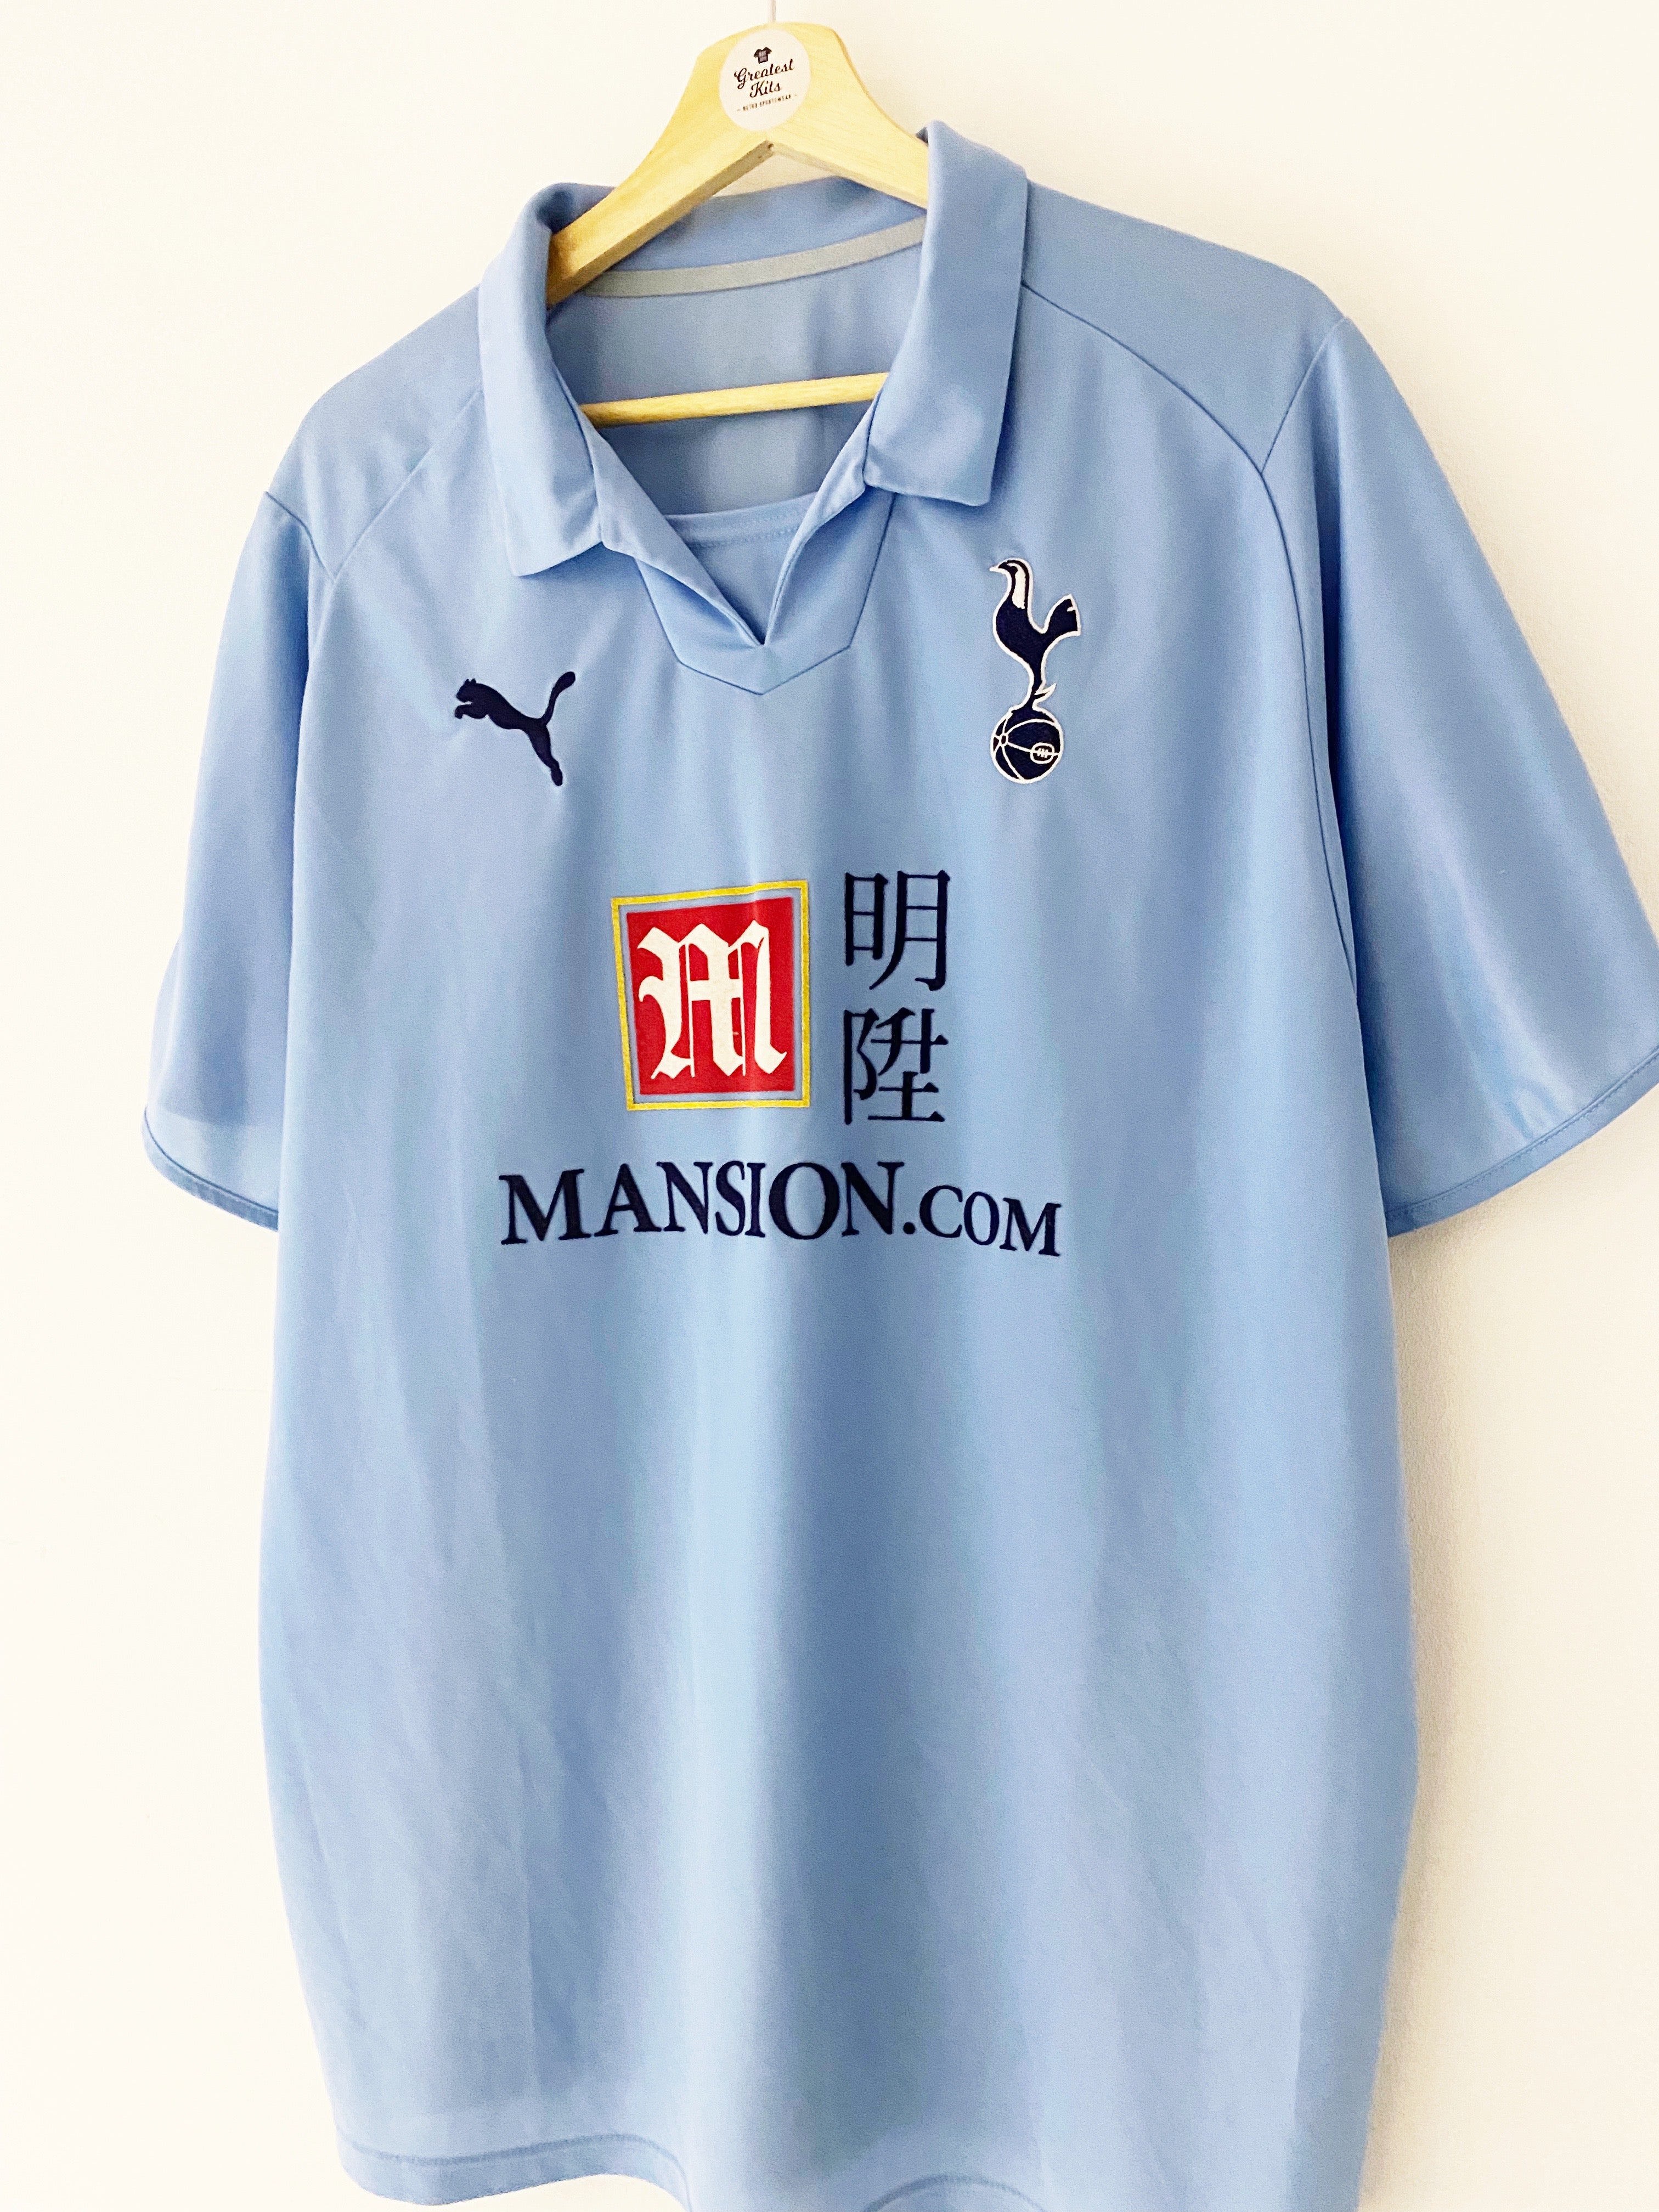 Shirt Fronted #33 – Tottenham Away 2009-10